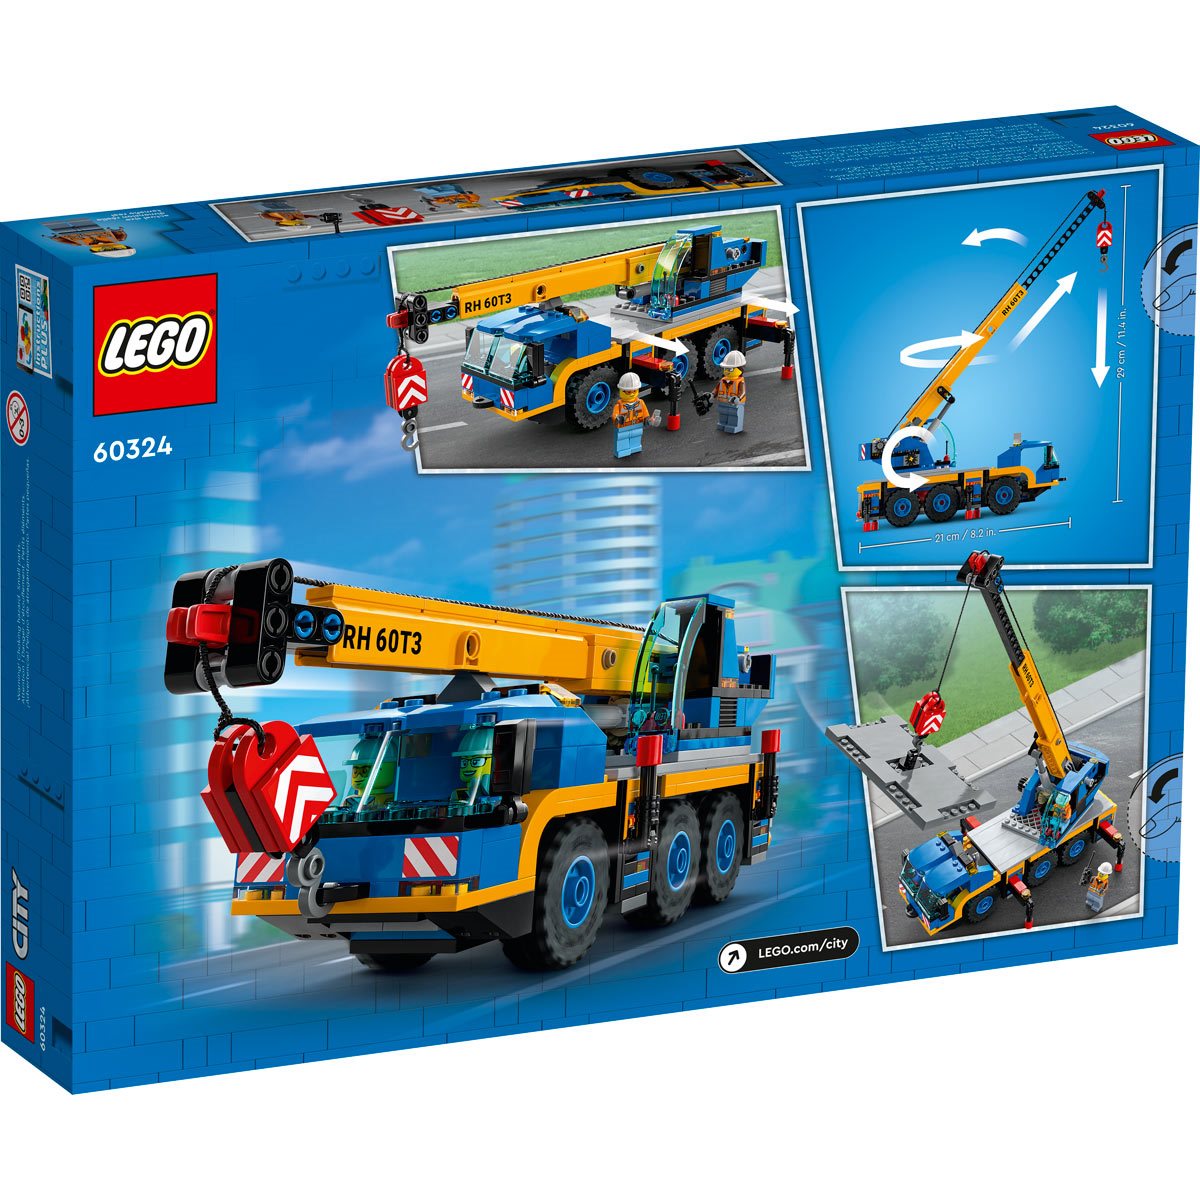 LEGO 60324 City Mobile Crane Entertainment Earth